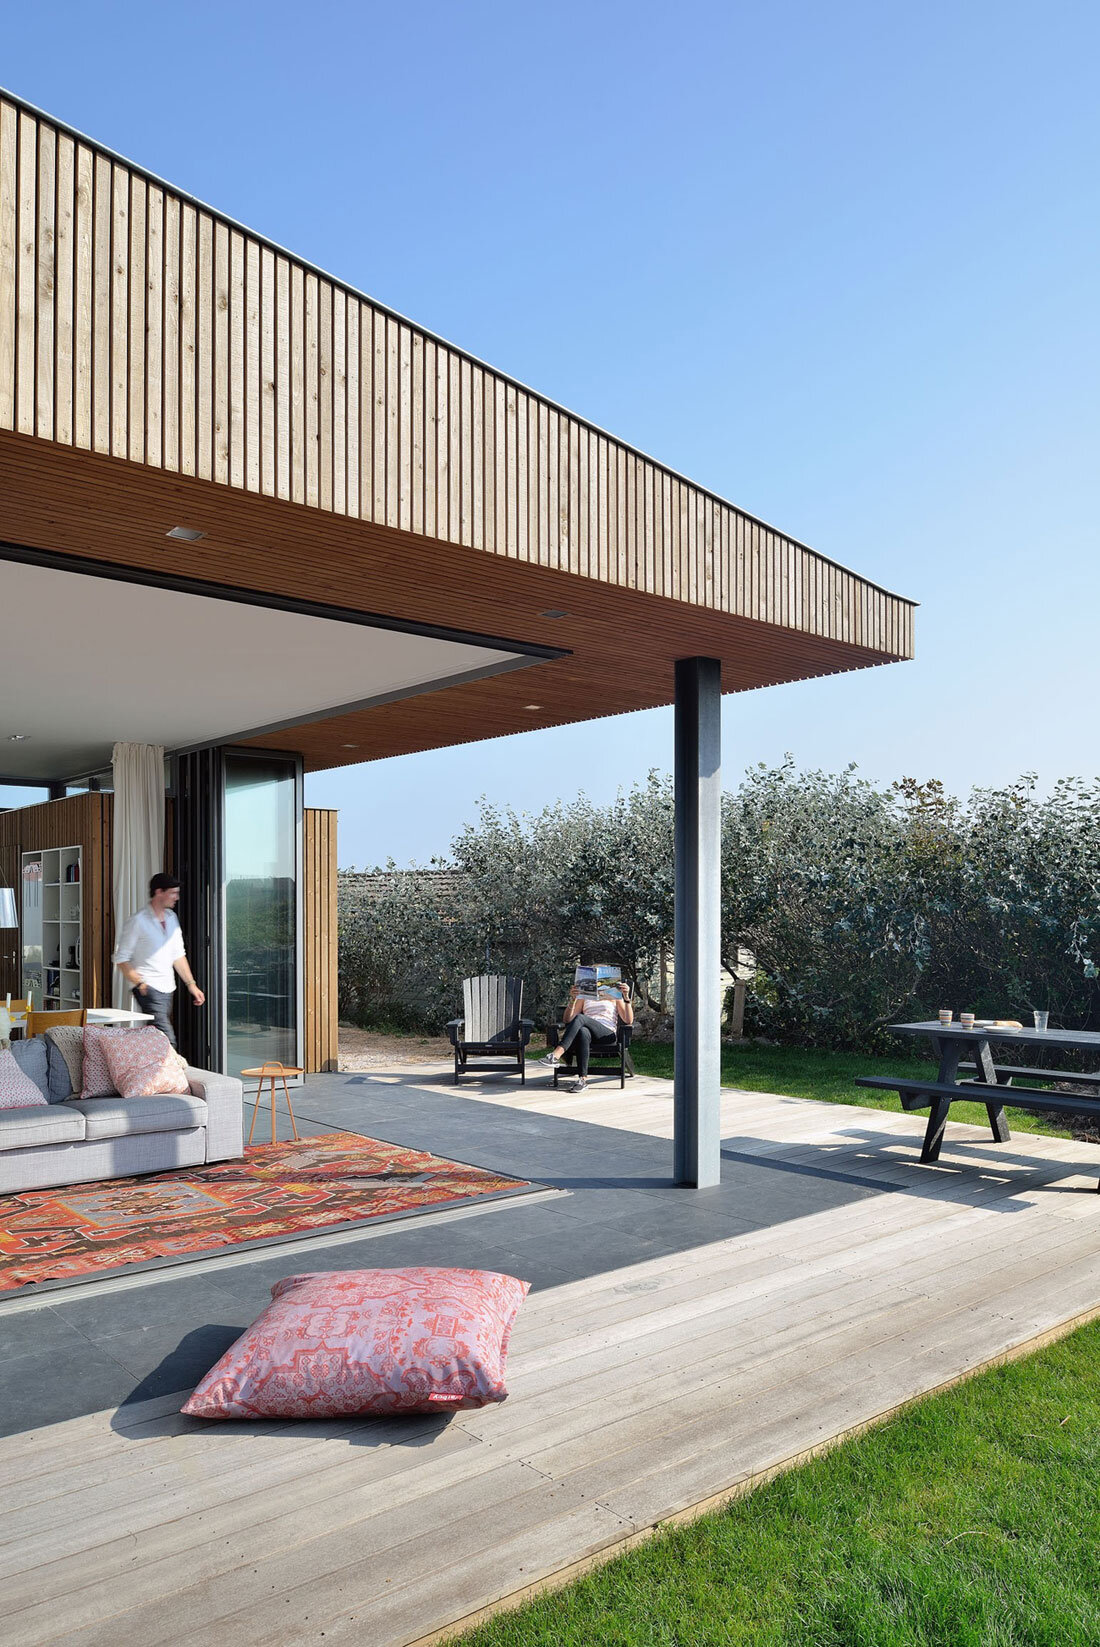 Vacation house with a retractable glass facade Bloem en Lemstra Architecten - HomeWorldDesign (8)